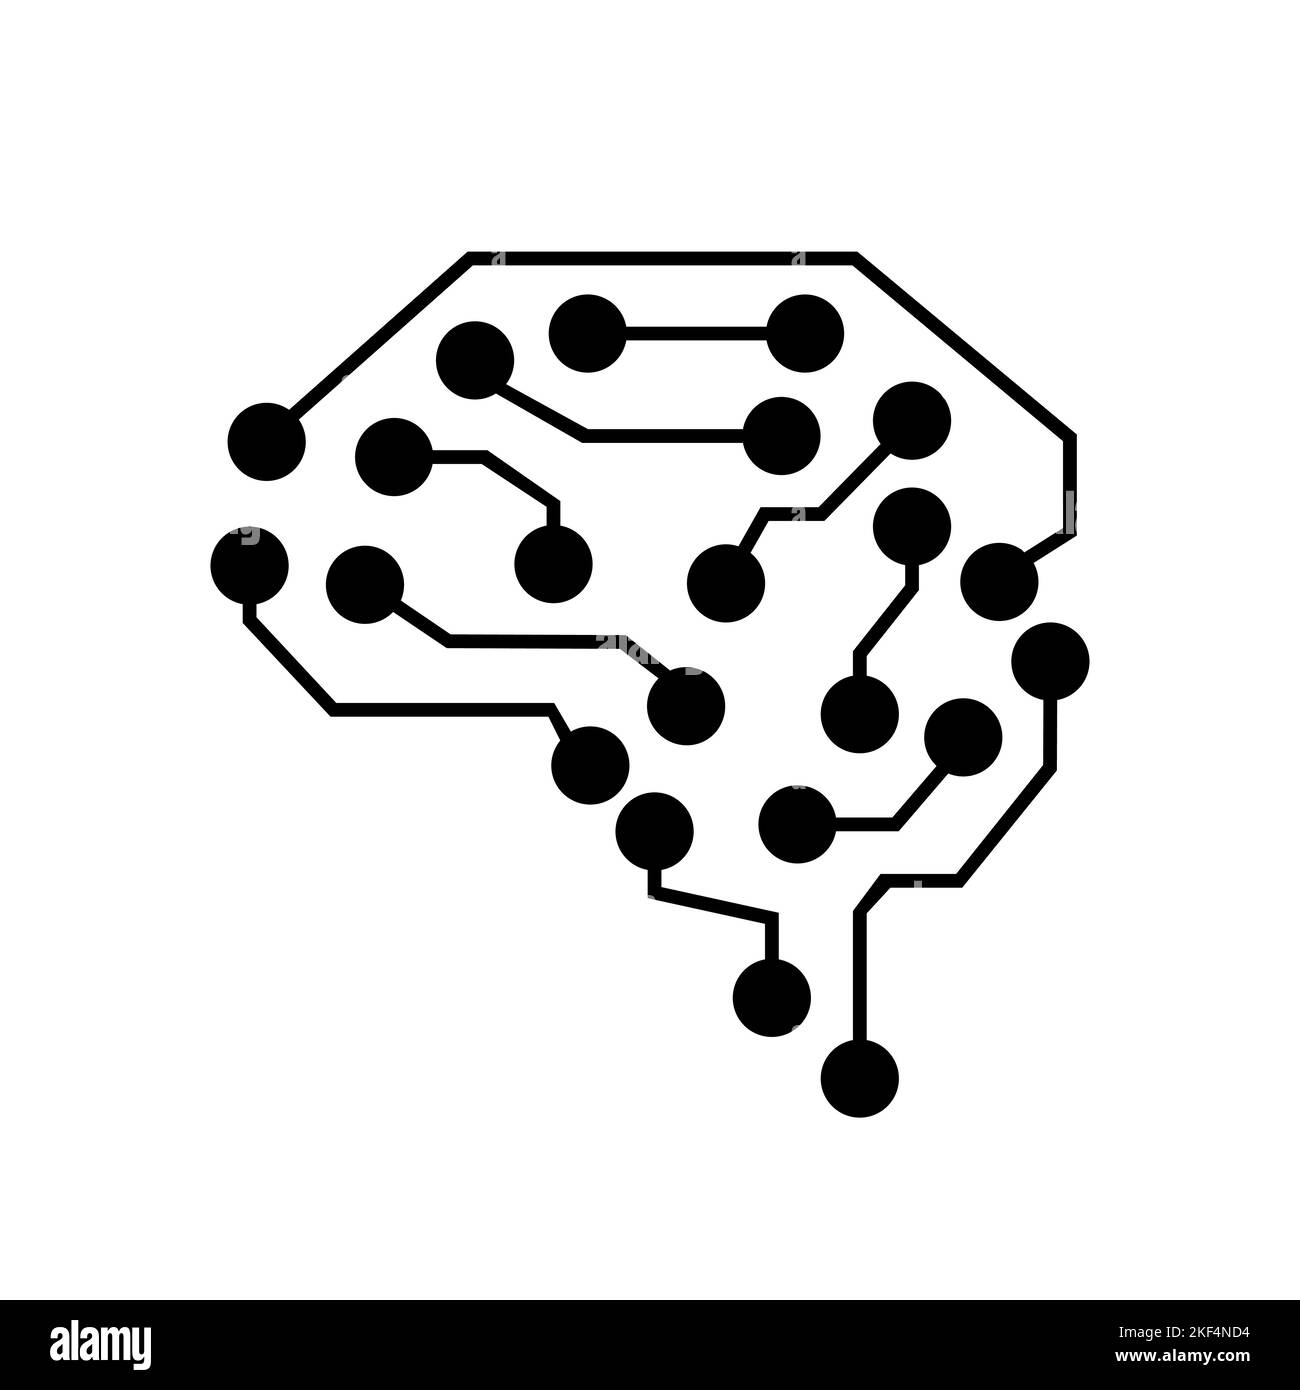 Brain circuit icon. Artificial intelligence AI brain concept. Vector illustration Stock Vector